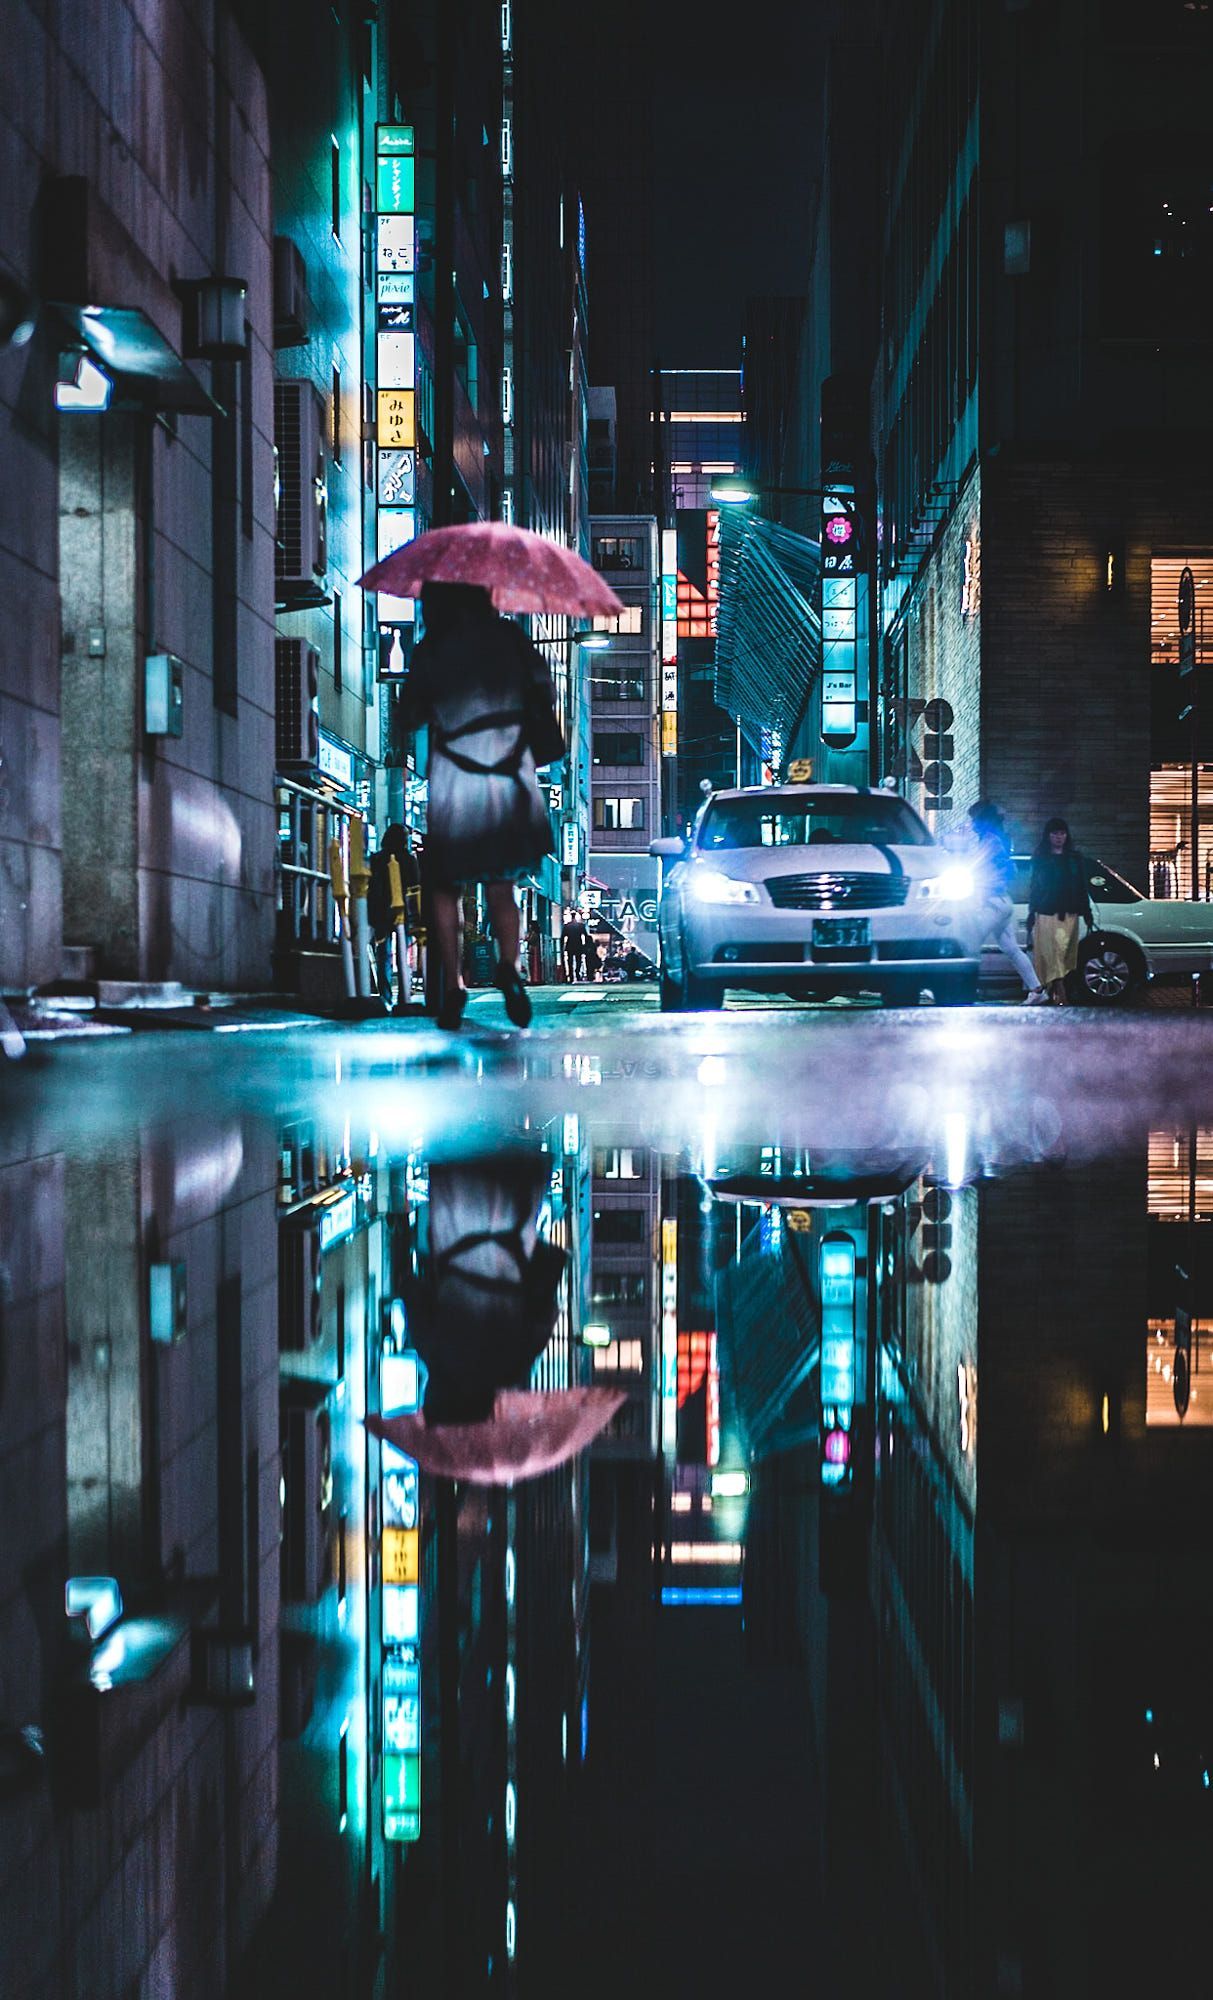 tokyo rain. Aesthetic japan, Urban photography, Rain street